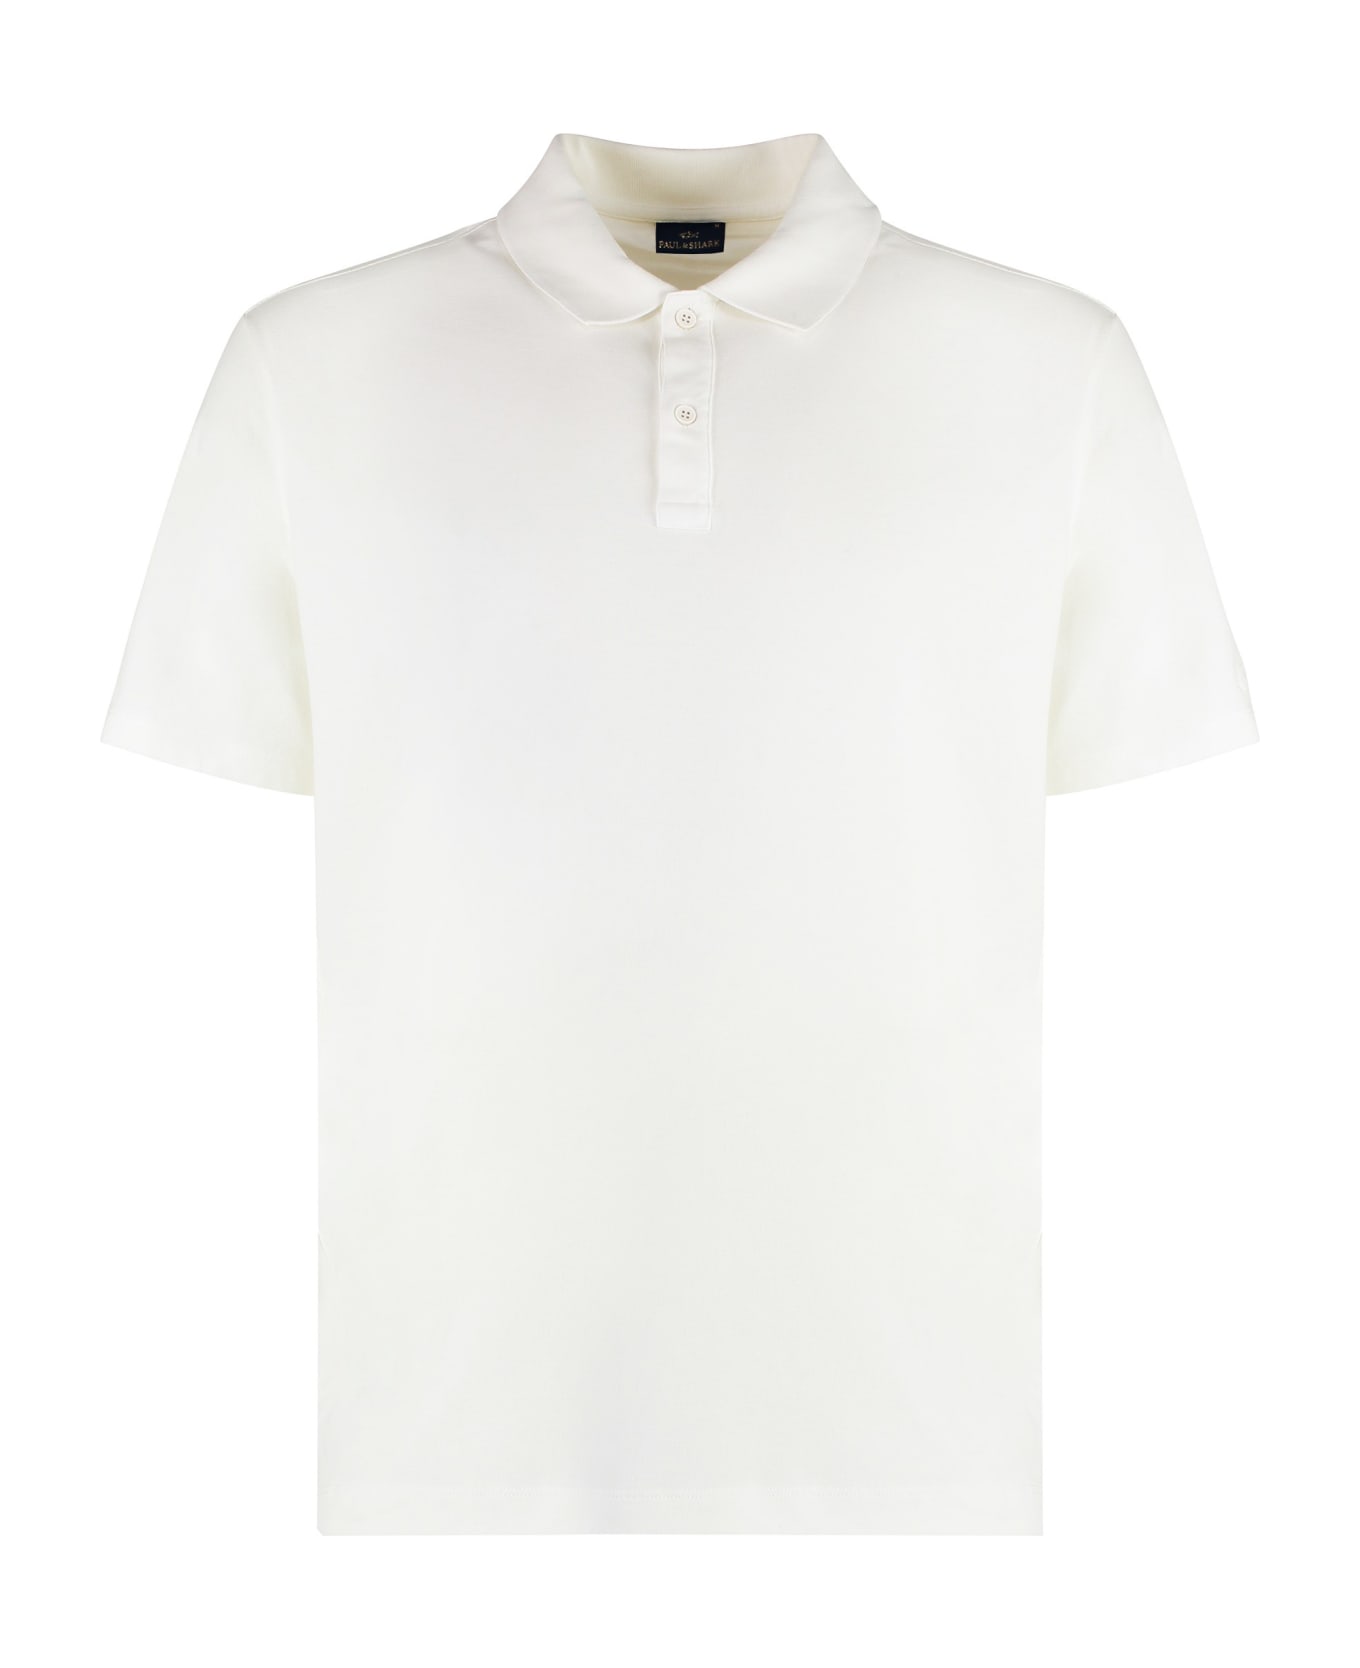 Paul&Shark Short Sleeve Cotton Polo Shirt - White ポロシャツ